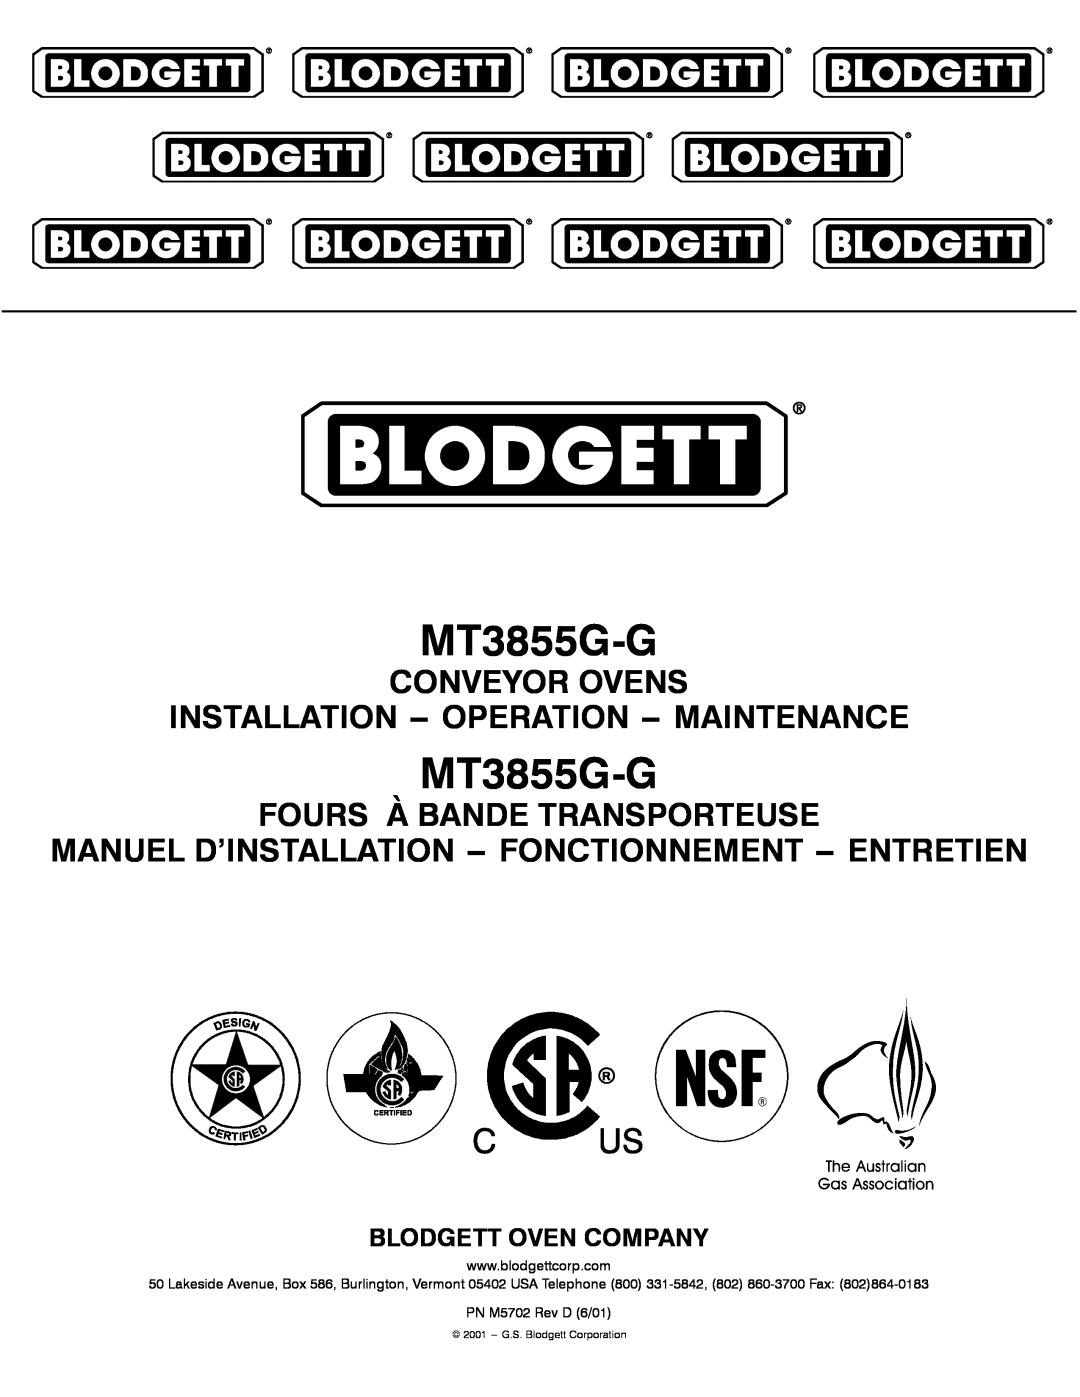 Blodgett MT3855G-G manual Conveyor Ovens Installation -- Operation -- Maintenance, Fours À Bande Transporteuse 